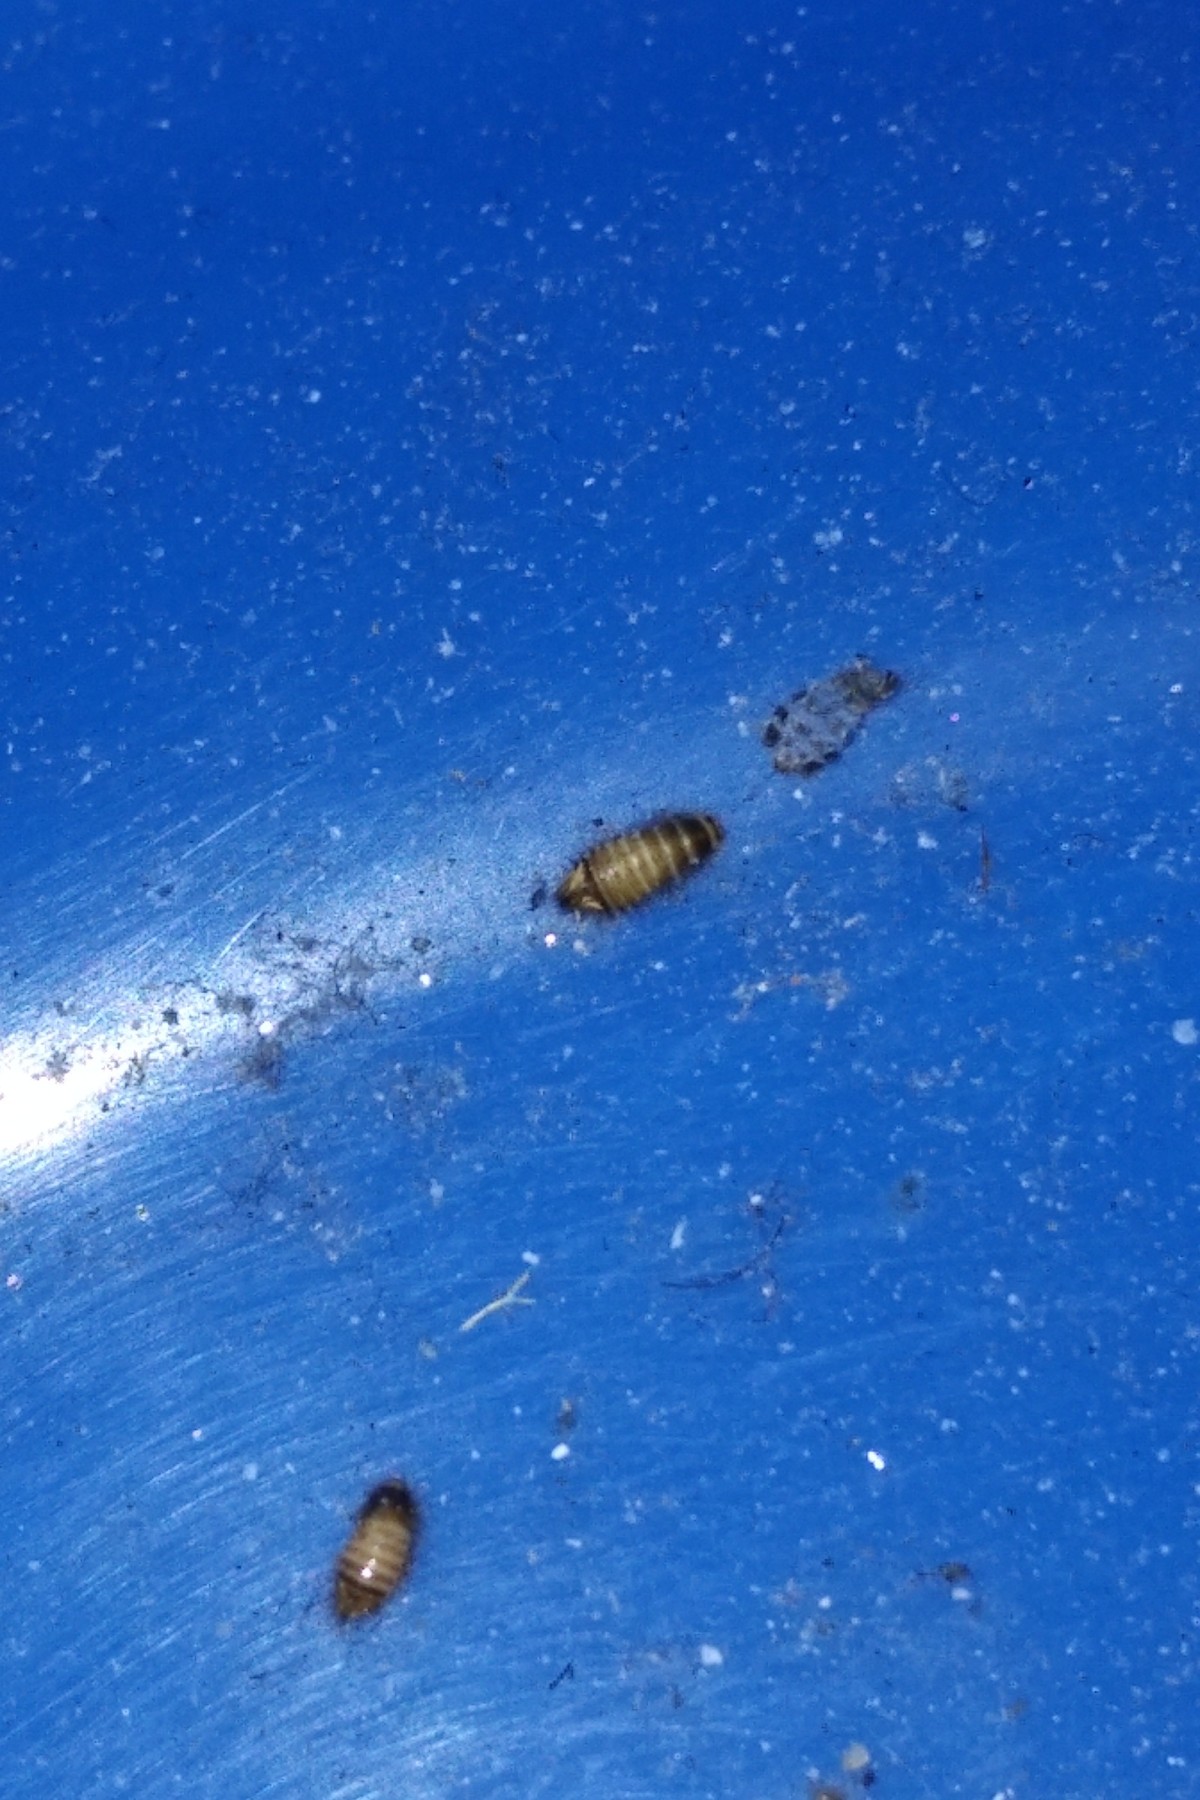 Identifying a Small Brown Striped Bug? | ThriftyFun